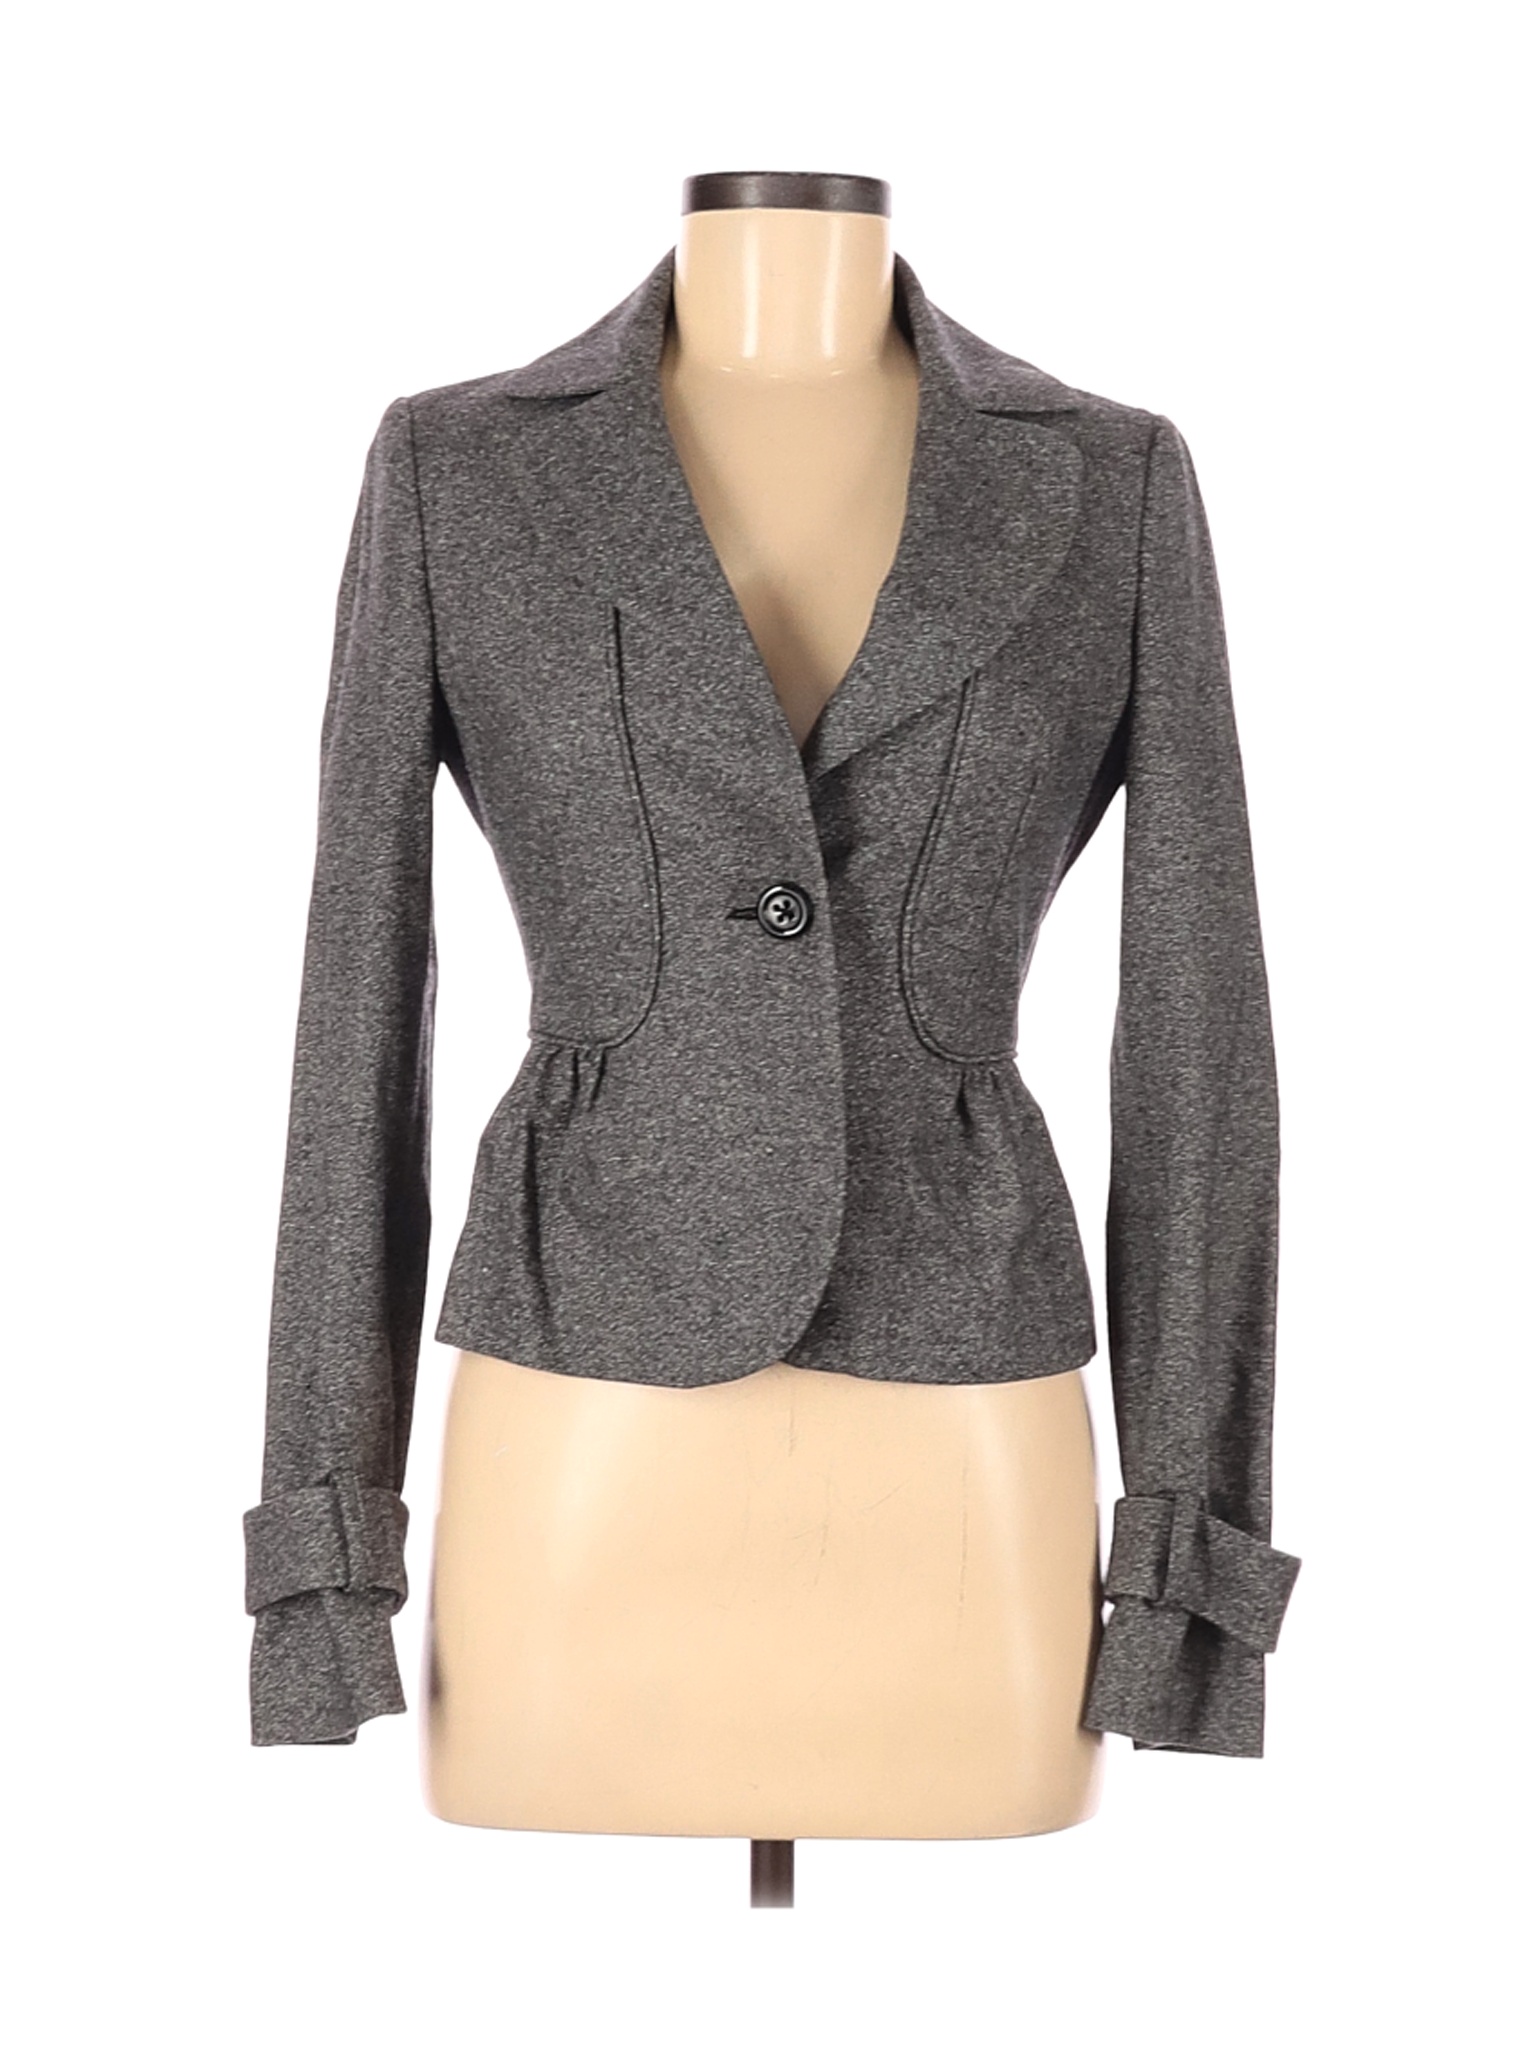 United Colors Of Benetton Women Gray Wool Blazer 40 eur | eBay